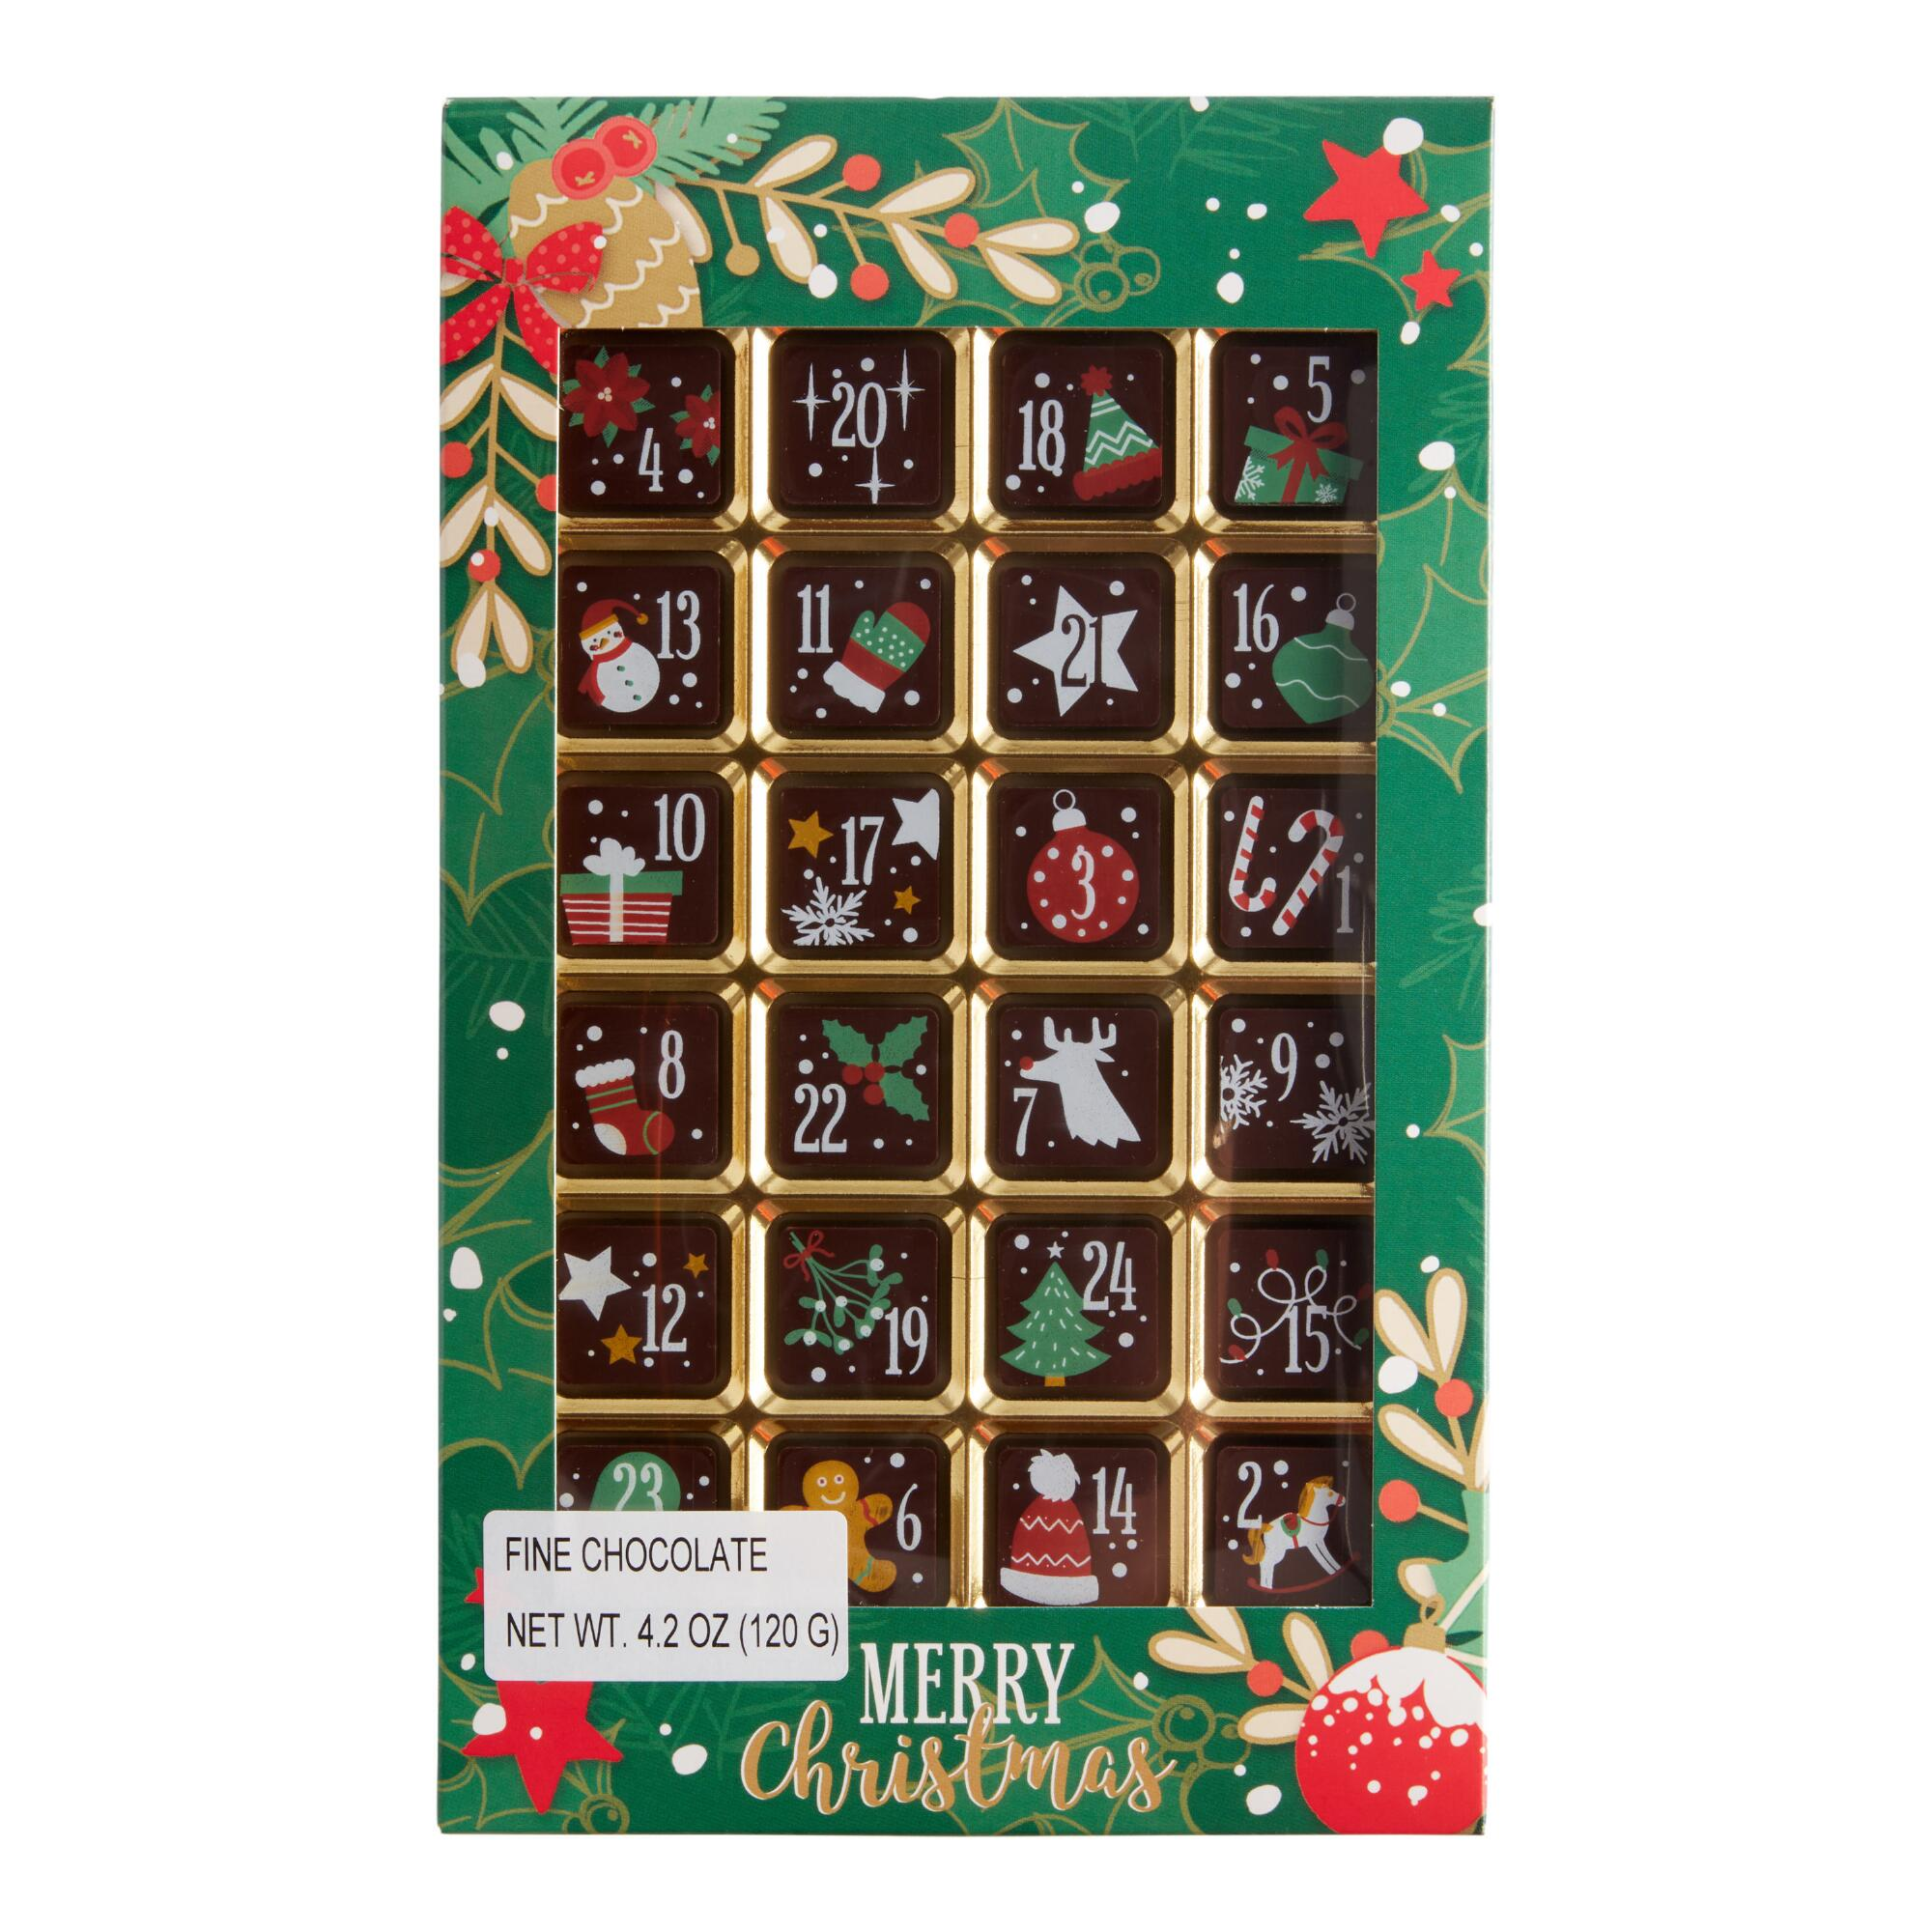 Weibler Dark Chocolate Advent Calendar Available Now! - Hello Subscription